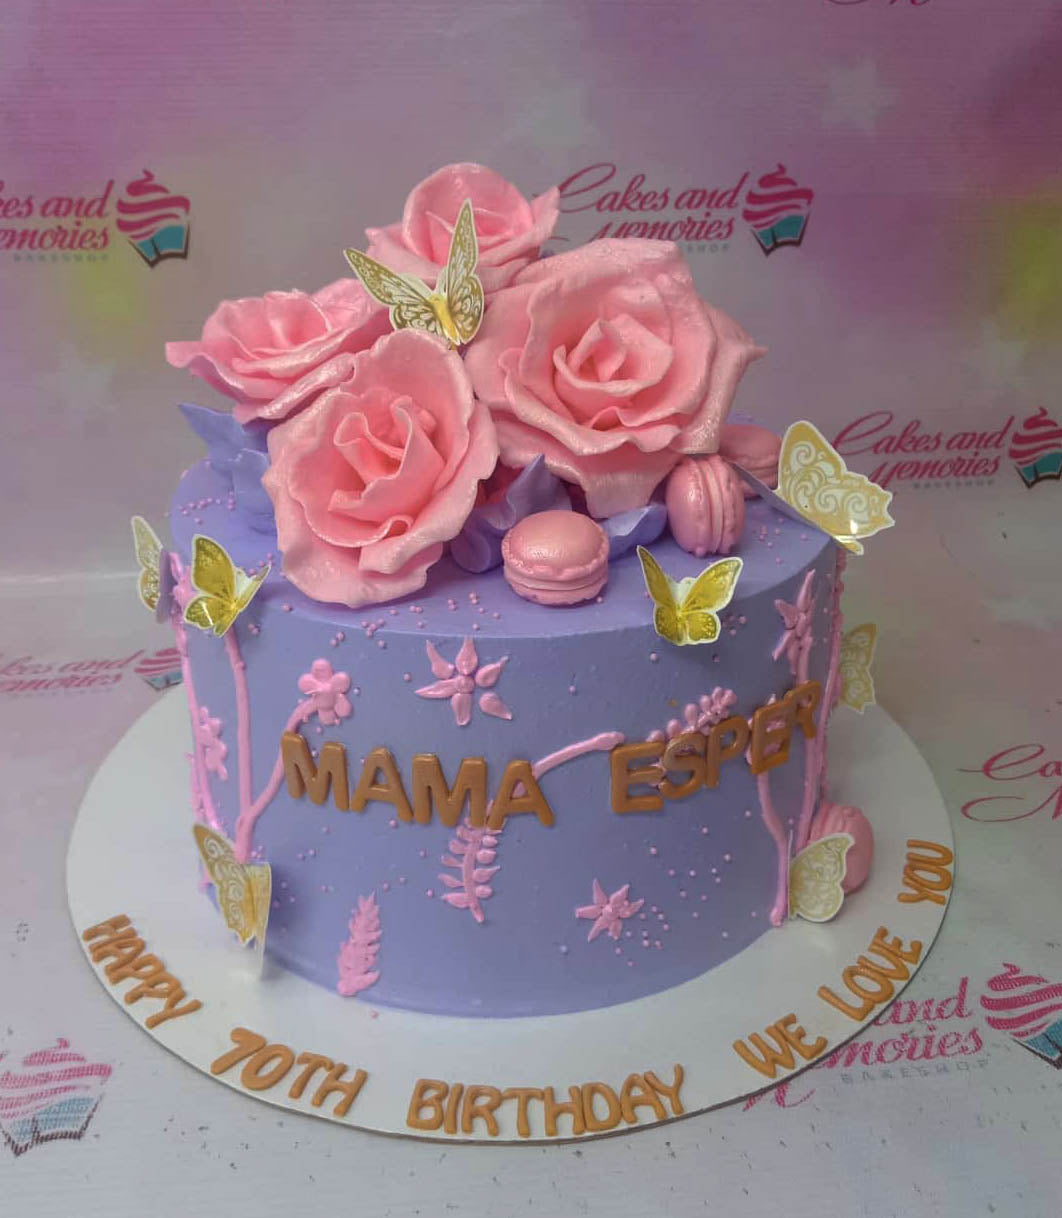 Diva Cakes - Unique 77th birthday cake for a special Dad😊 08033009464,  08171364099, 07088318466 #cakes #birthdaycakes #birthday #celebrationcake  #malecakedesign #bestcakes #cakedecorating #uniquecake #Figurecake  #77thbirthday #instacakes #cakesinlagos ...